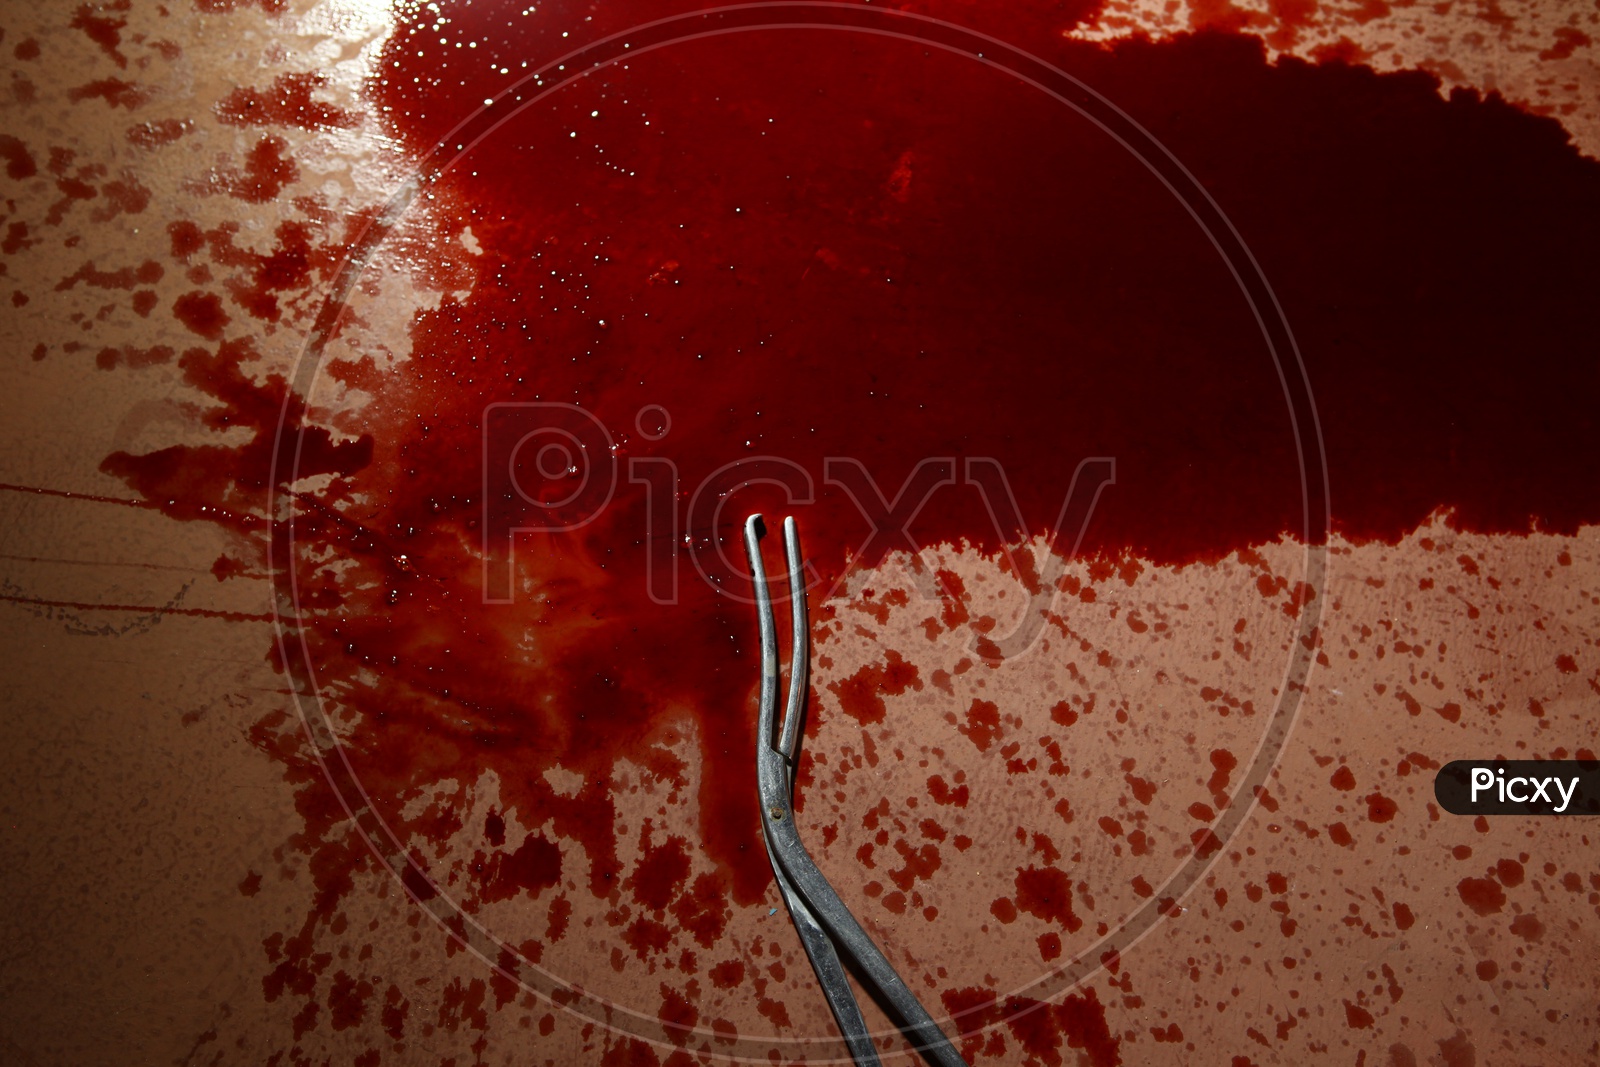 Blood Texture